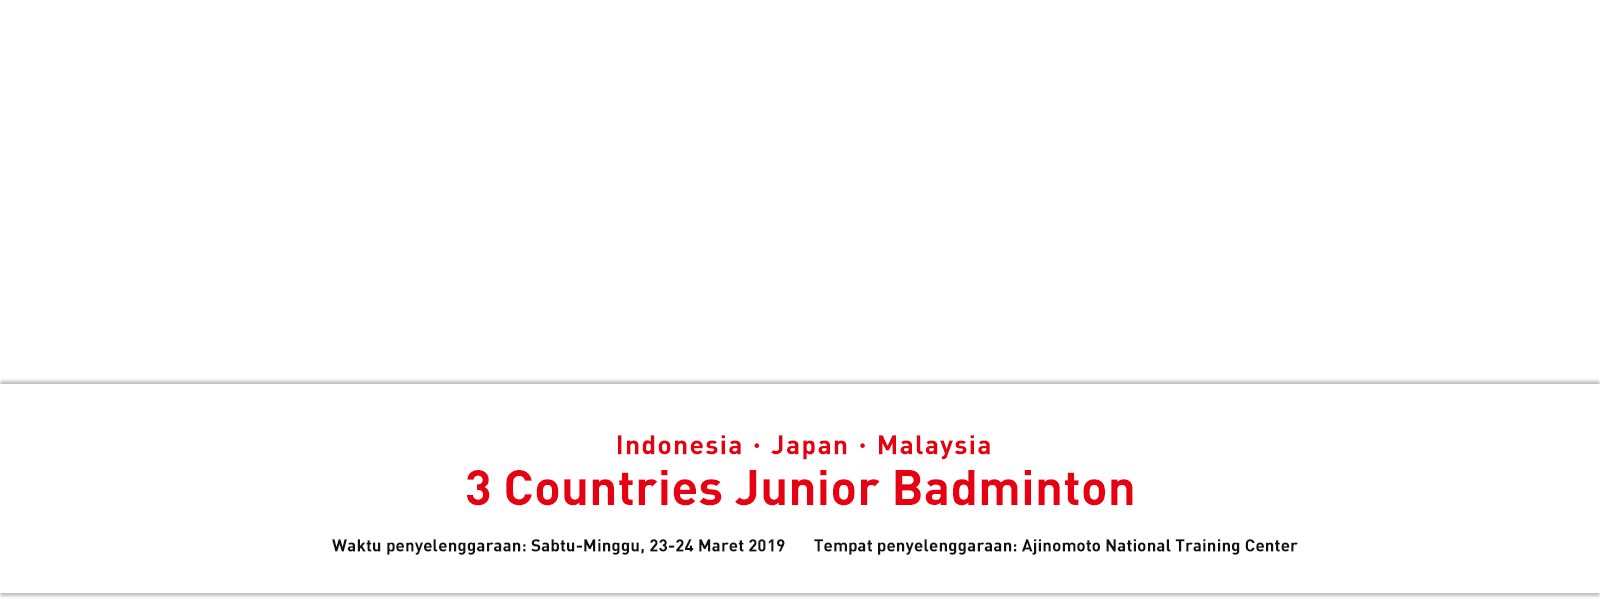 Indonesia・Japan・Malaysia 3 Countries Junior Badminton 